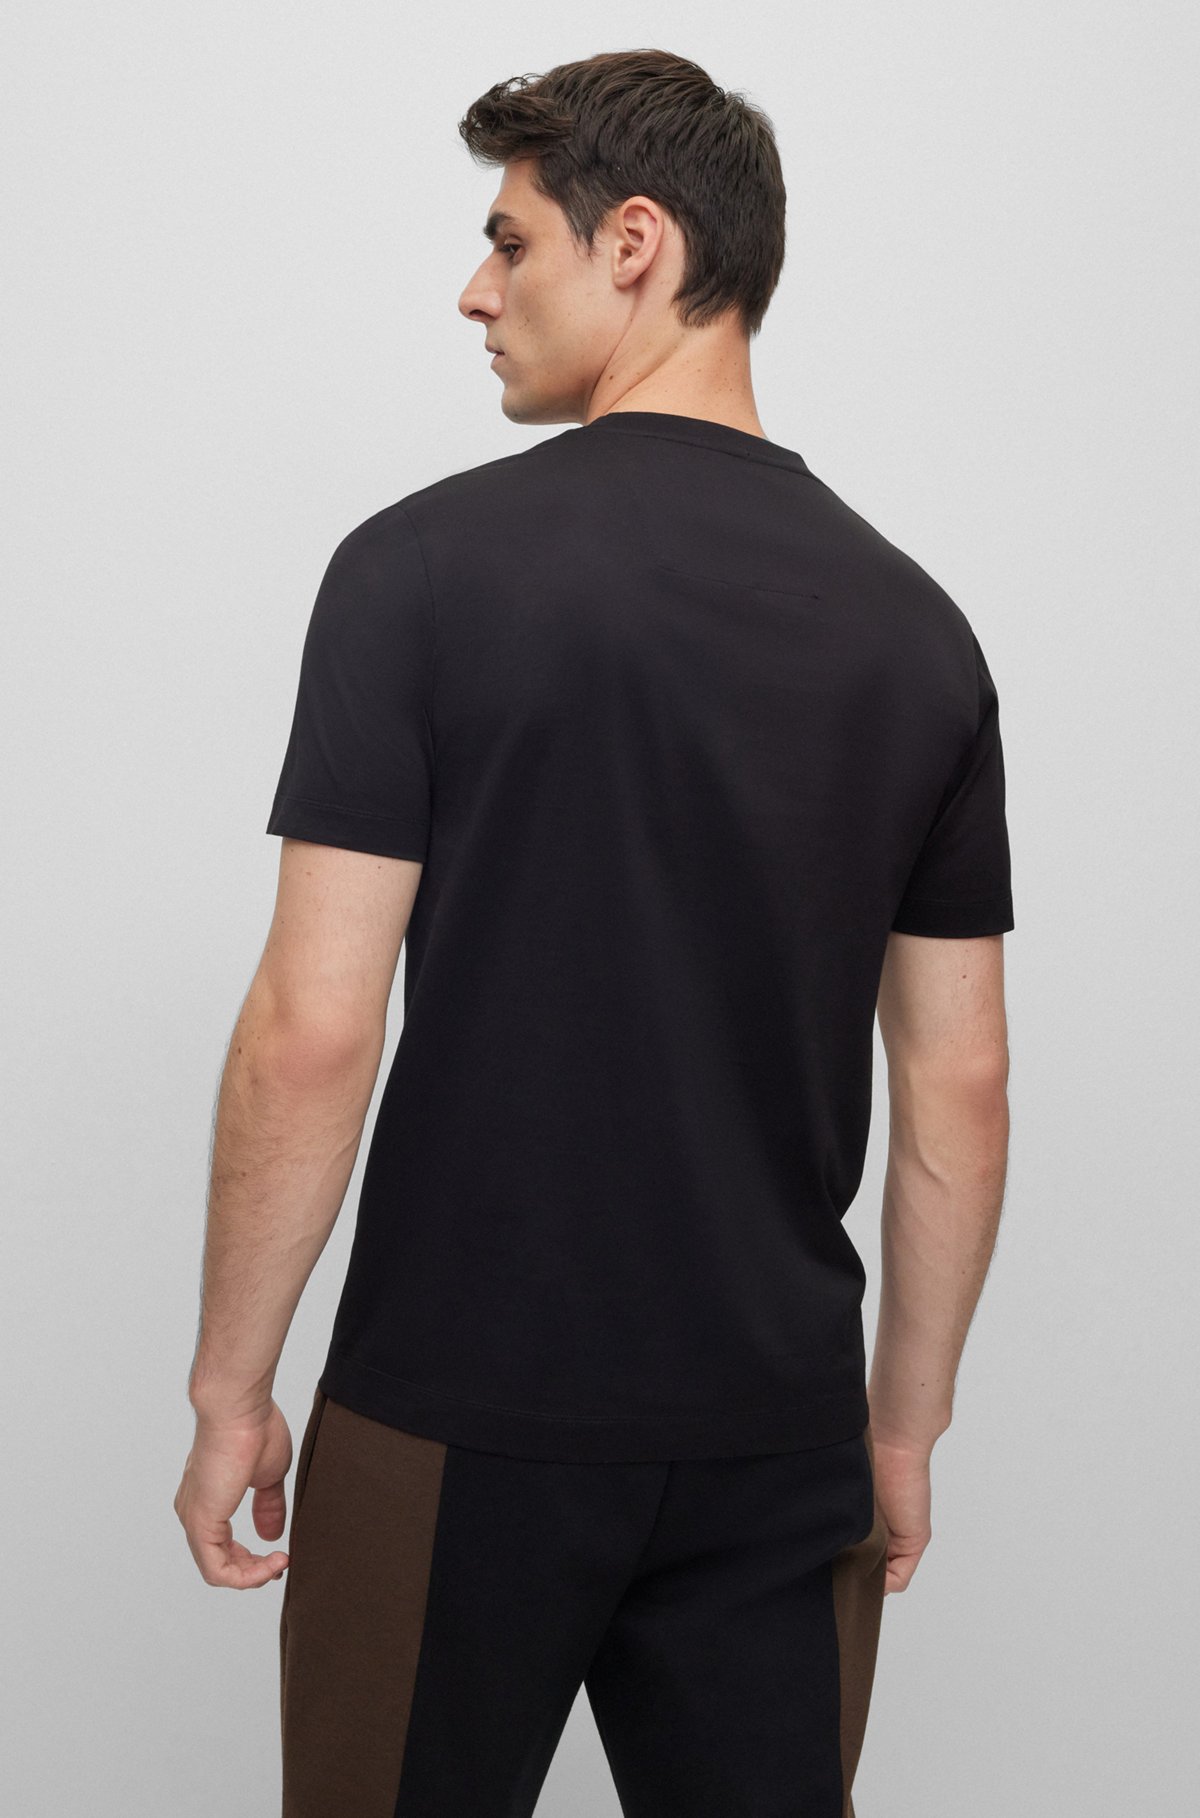 Porsche x BOSS mercerised-cotton T-shirt with flocked logo, Black